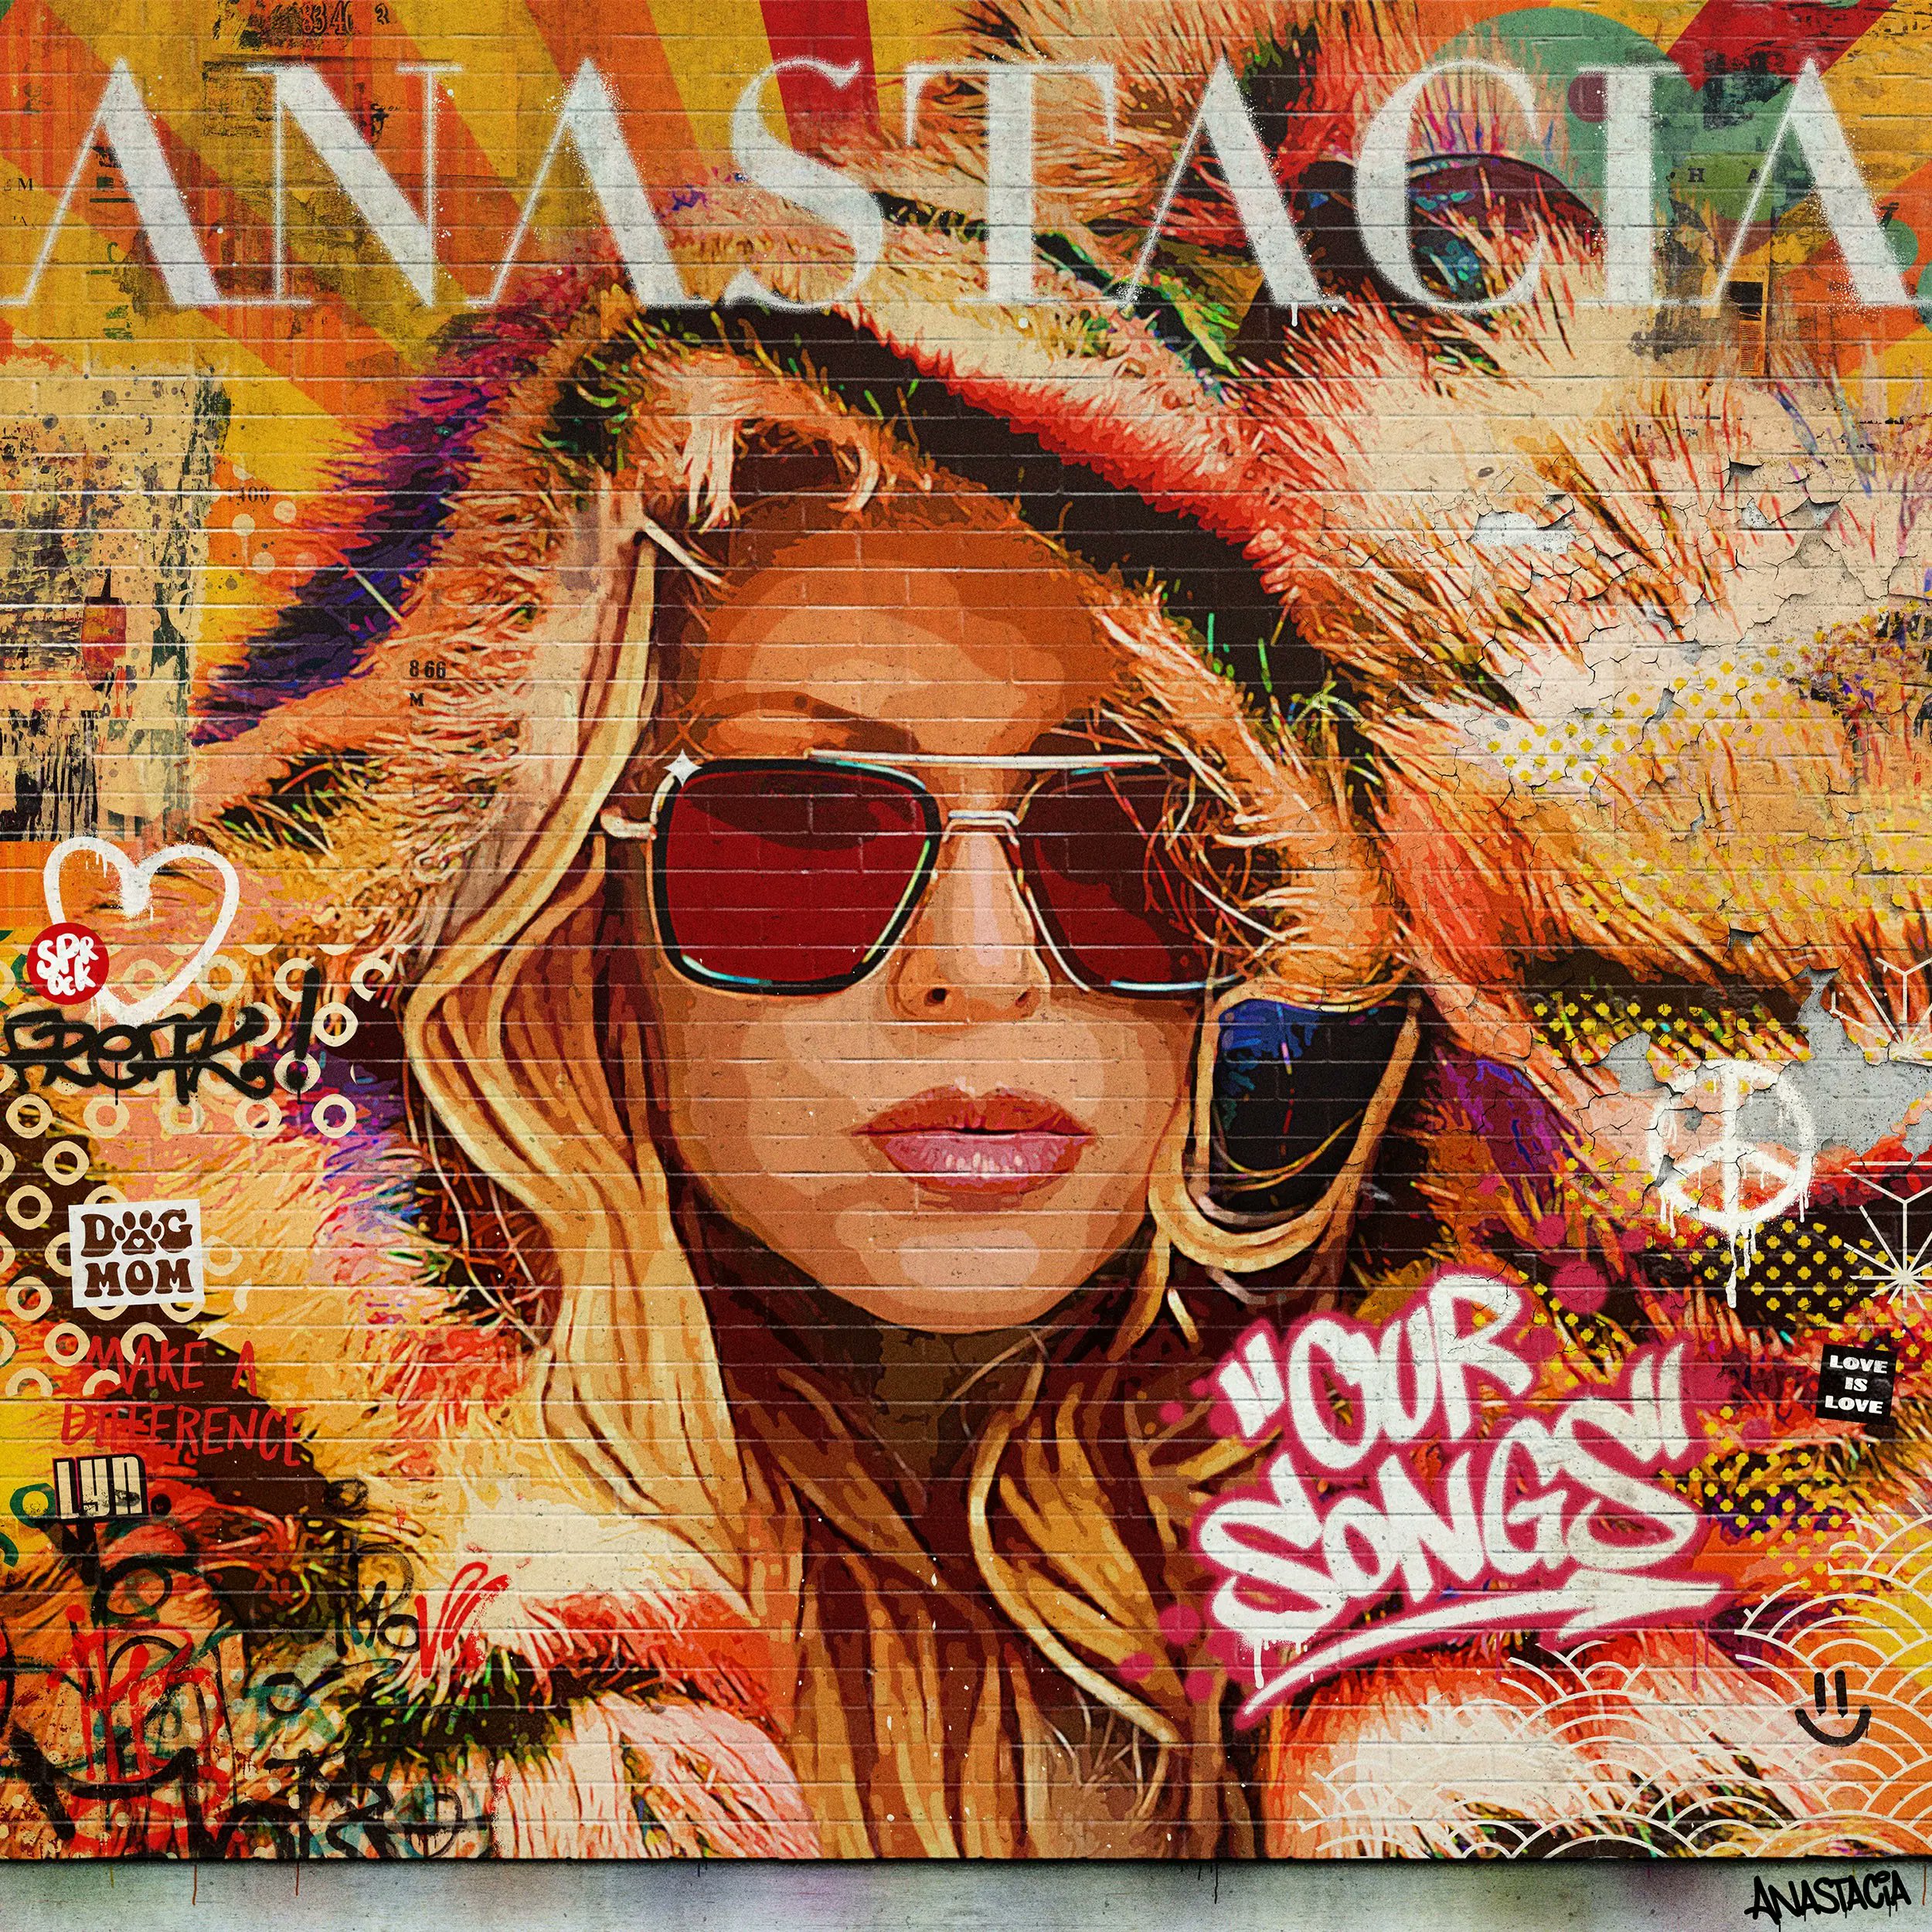 Anastacia Our Songs cover artwork